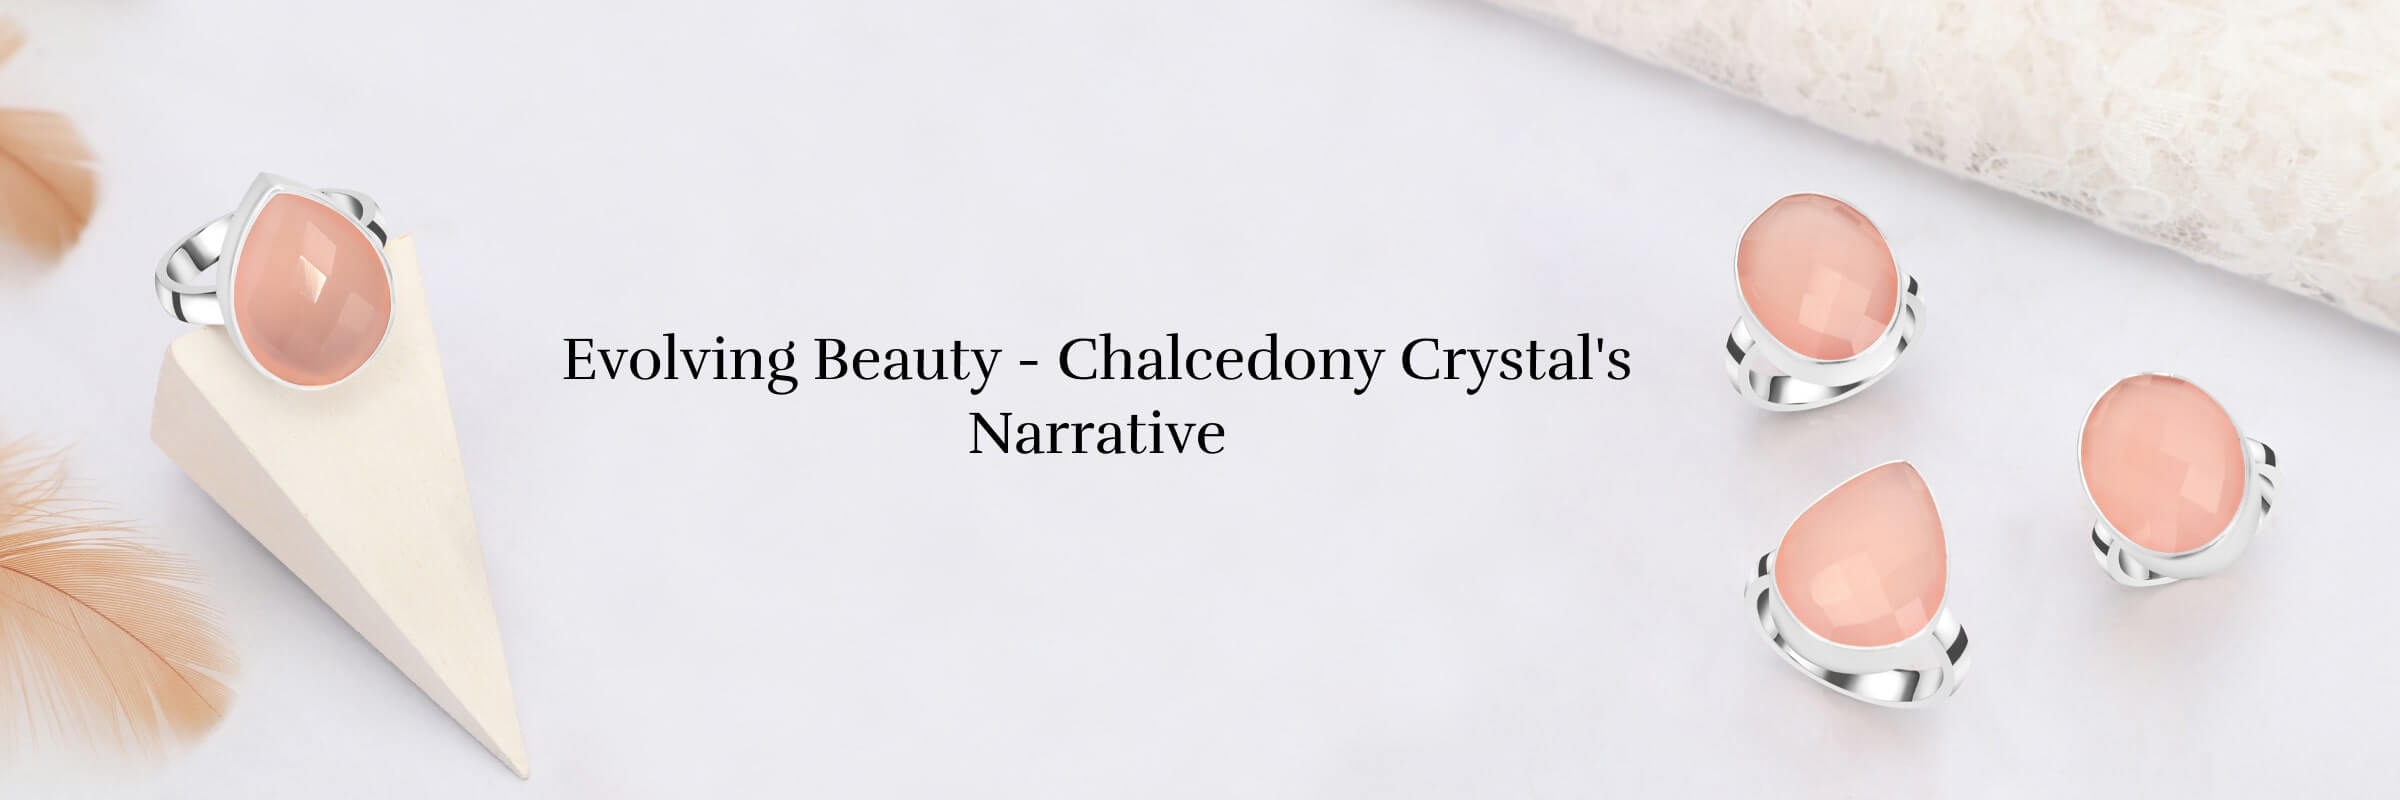 History of Chalcedony Crystal